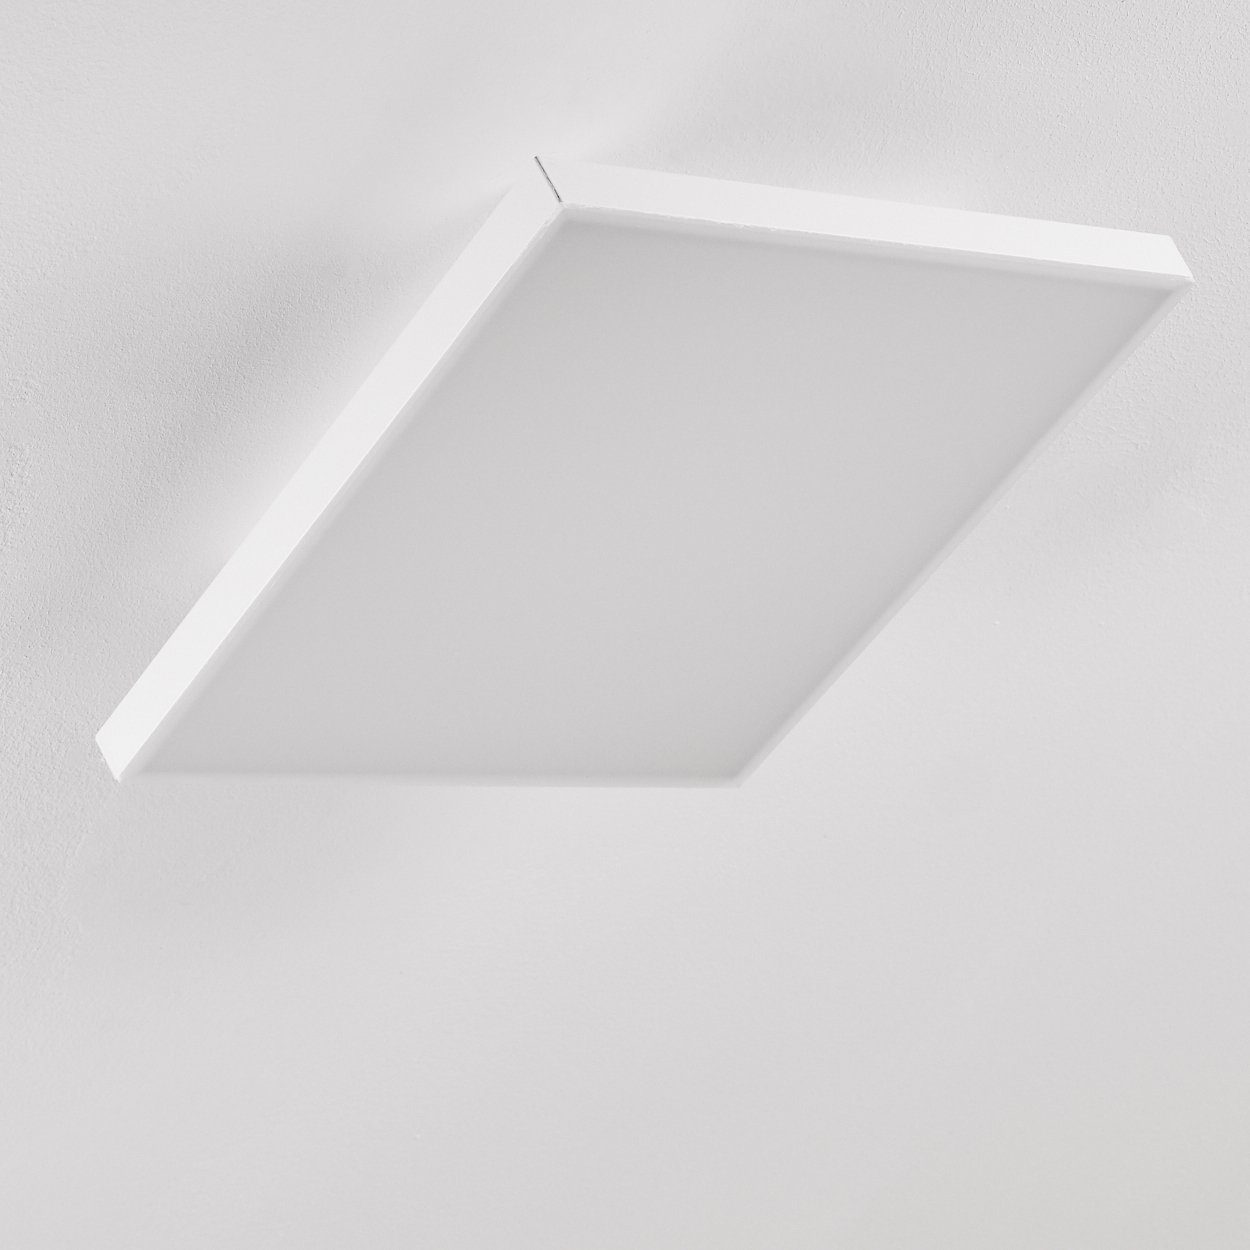 hofstein Panel »Soanne« LED Panel eckiges Aluminiumin 3000 modern Design Kelvin, Deckenpanel 18 flachem aus Weiß, Lumen, Watt, in 2100